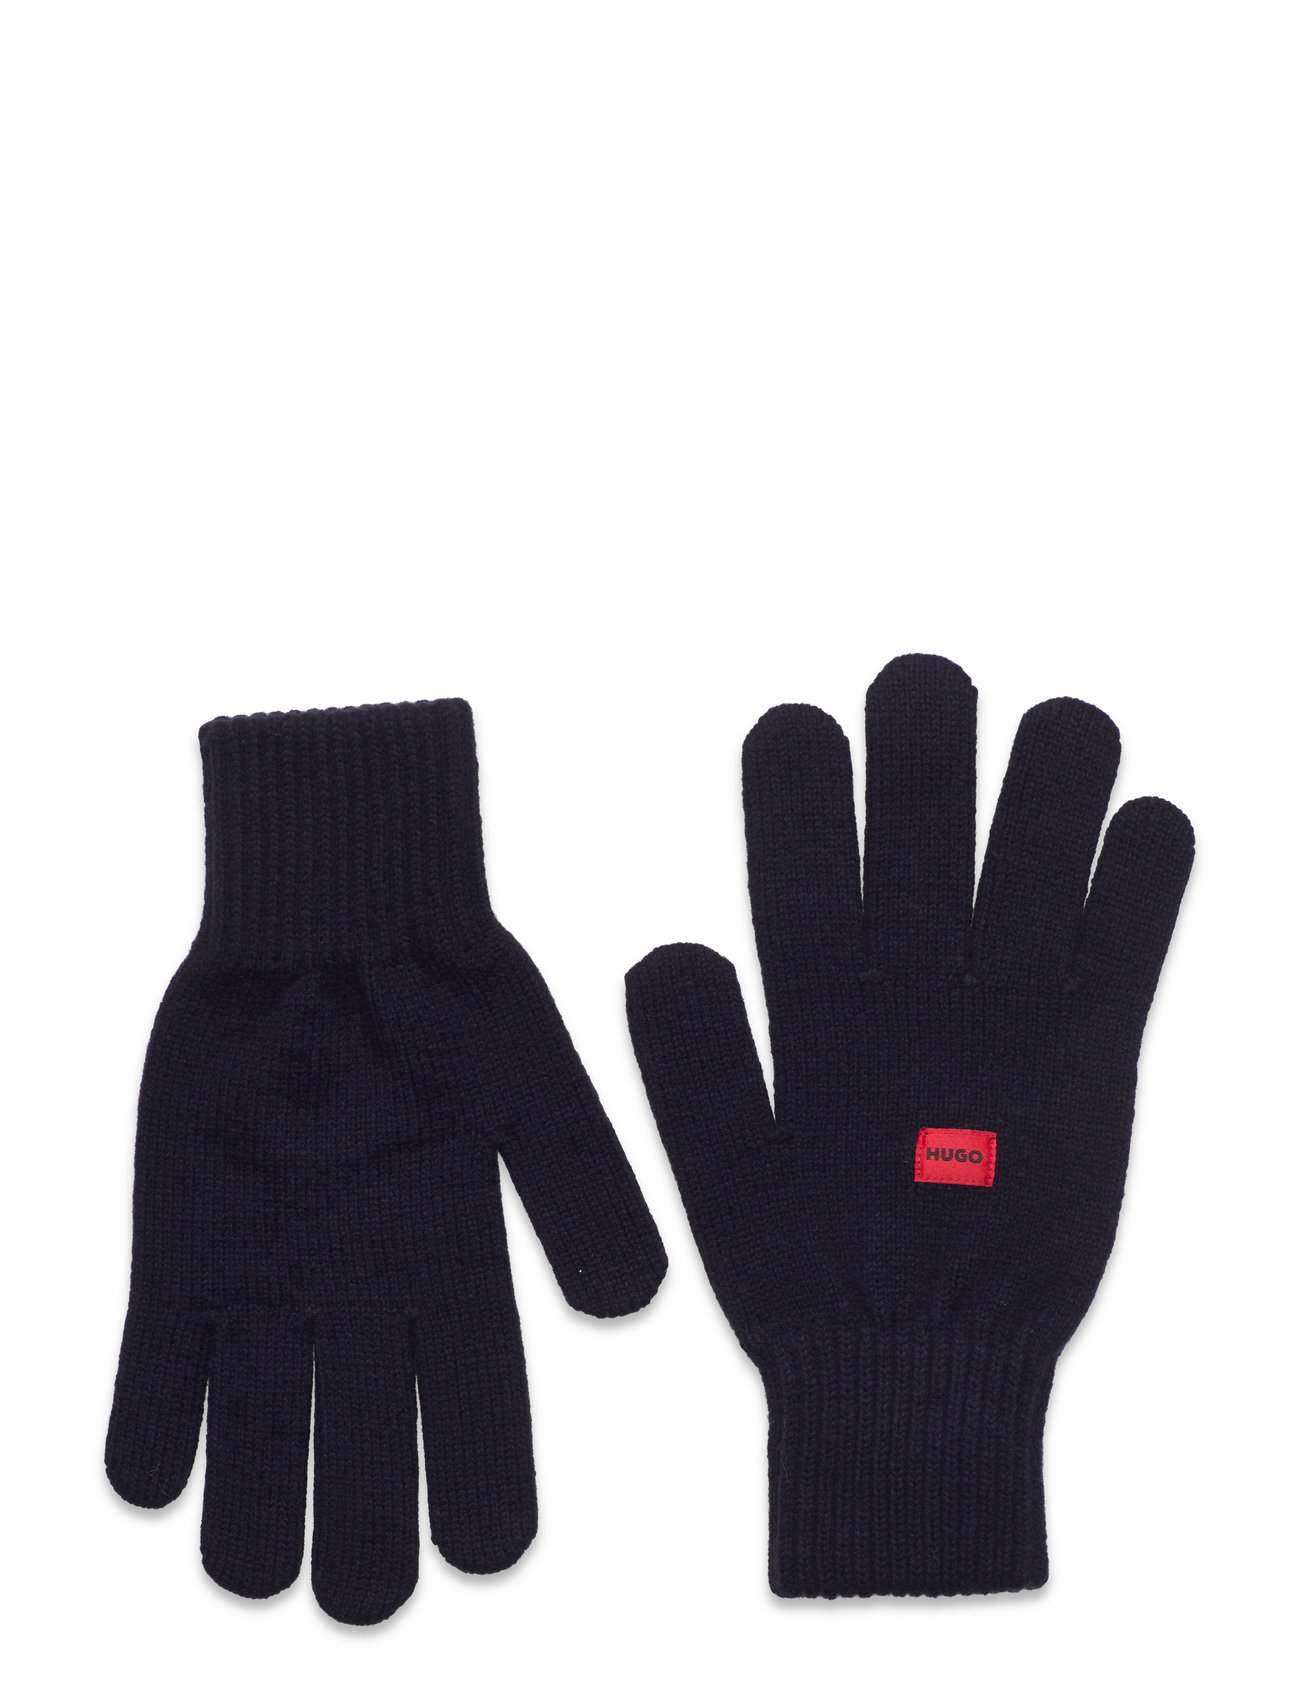 HUGO Waff 3 - Gloves